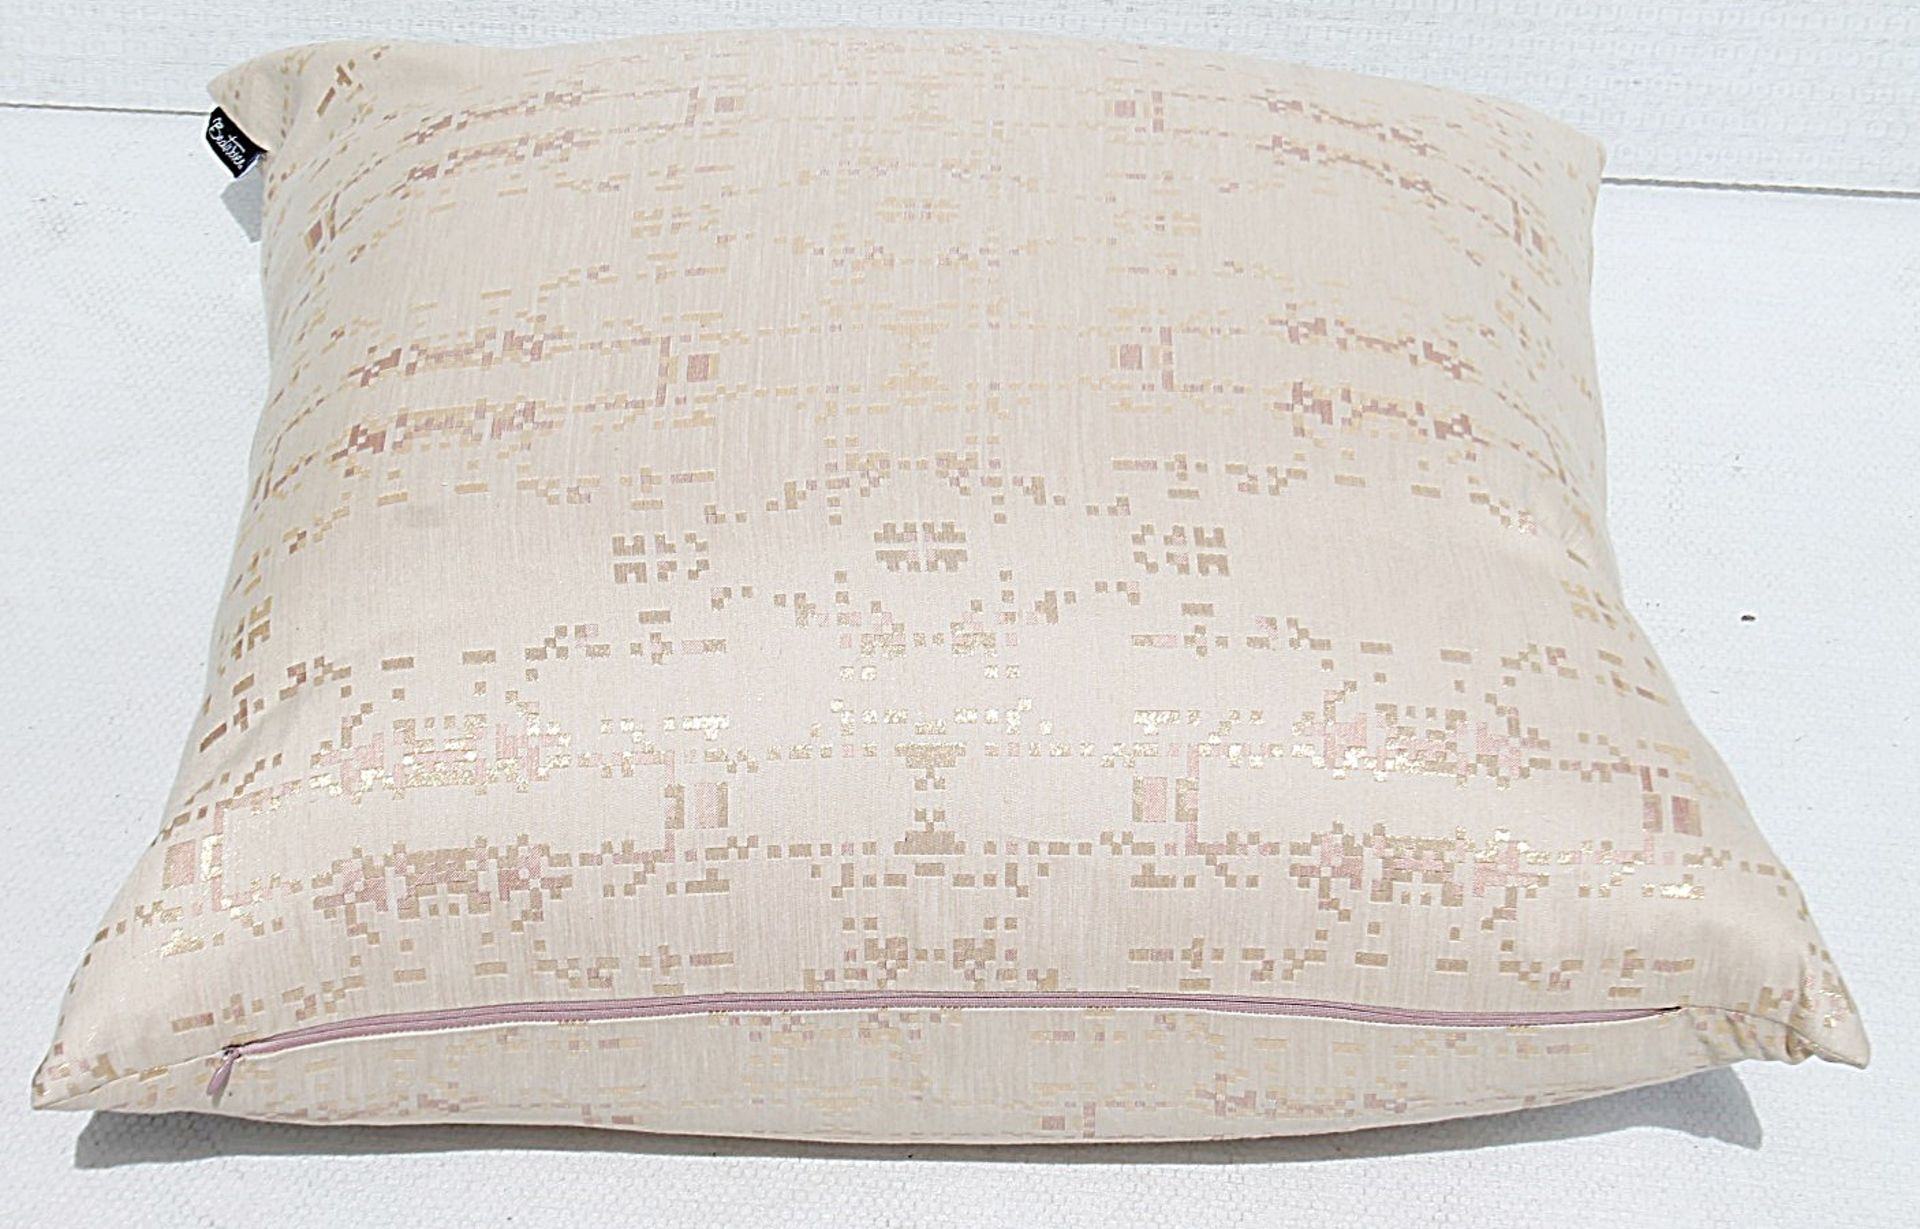 1 x BEATWOVEN 'Adage' Designer Large Weaved Silk Cushion - Original Price £295.00 - Ref: 5536778/ - Image 5 of 6